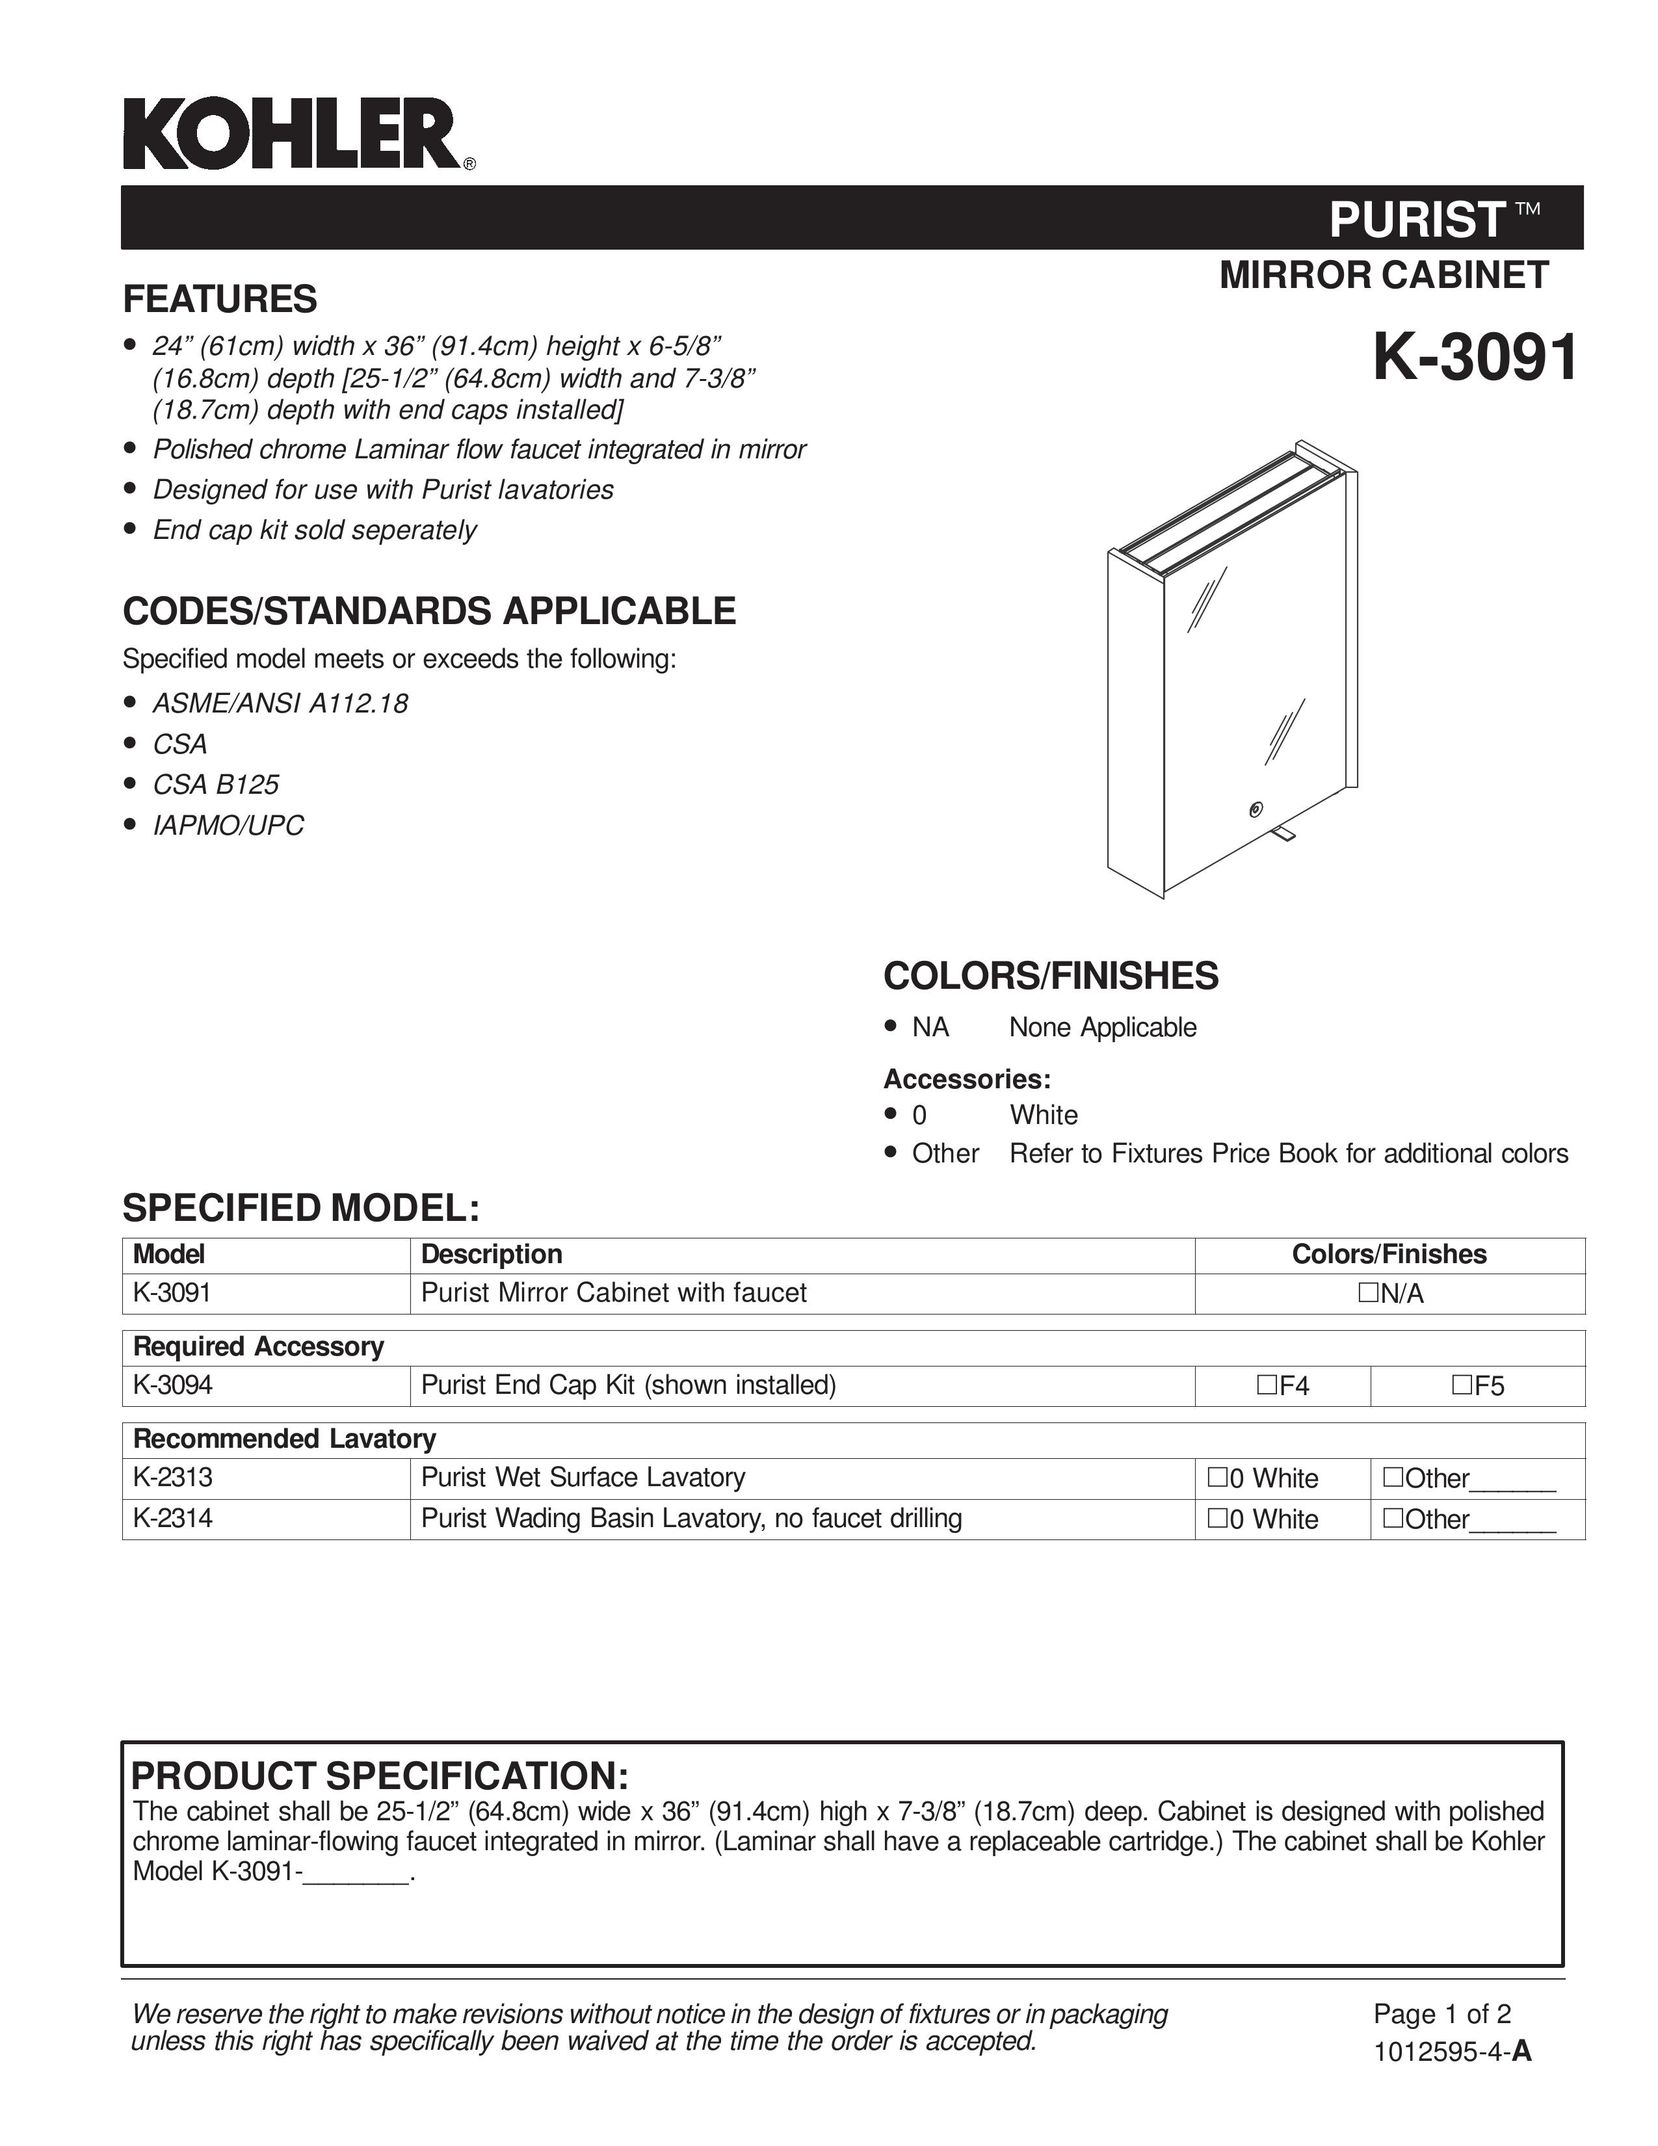 Kohler K-3091 Indoor Furnishings User Manual